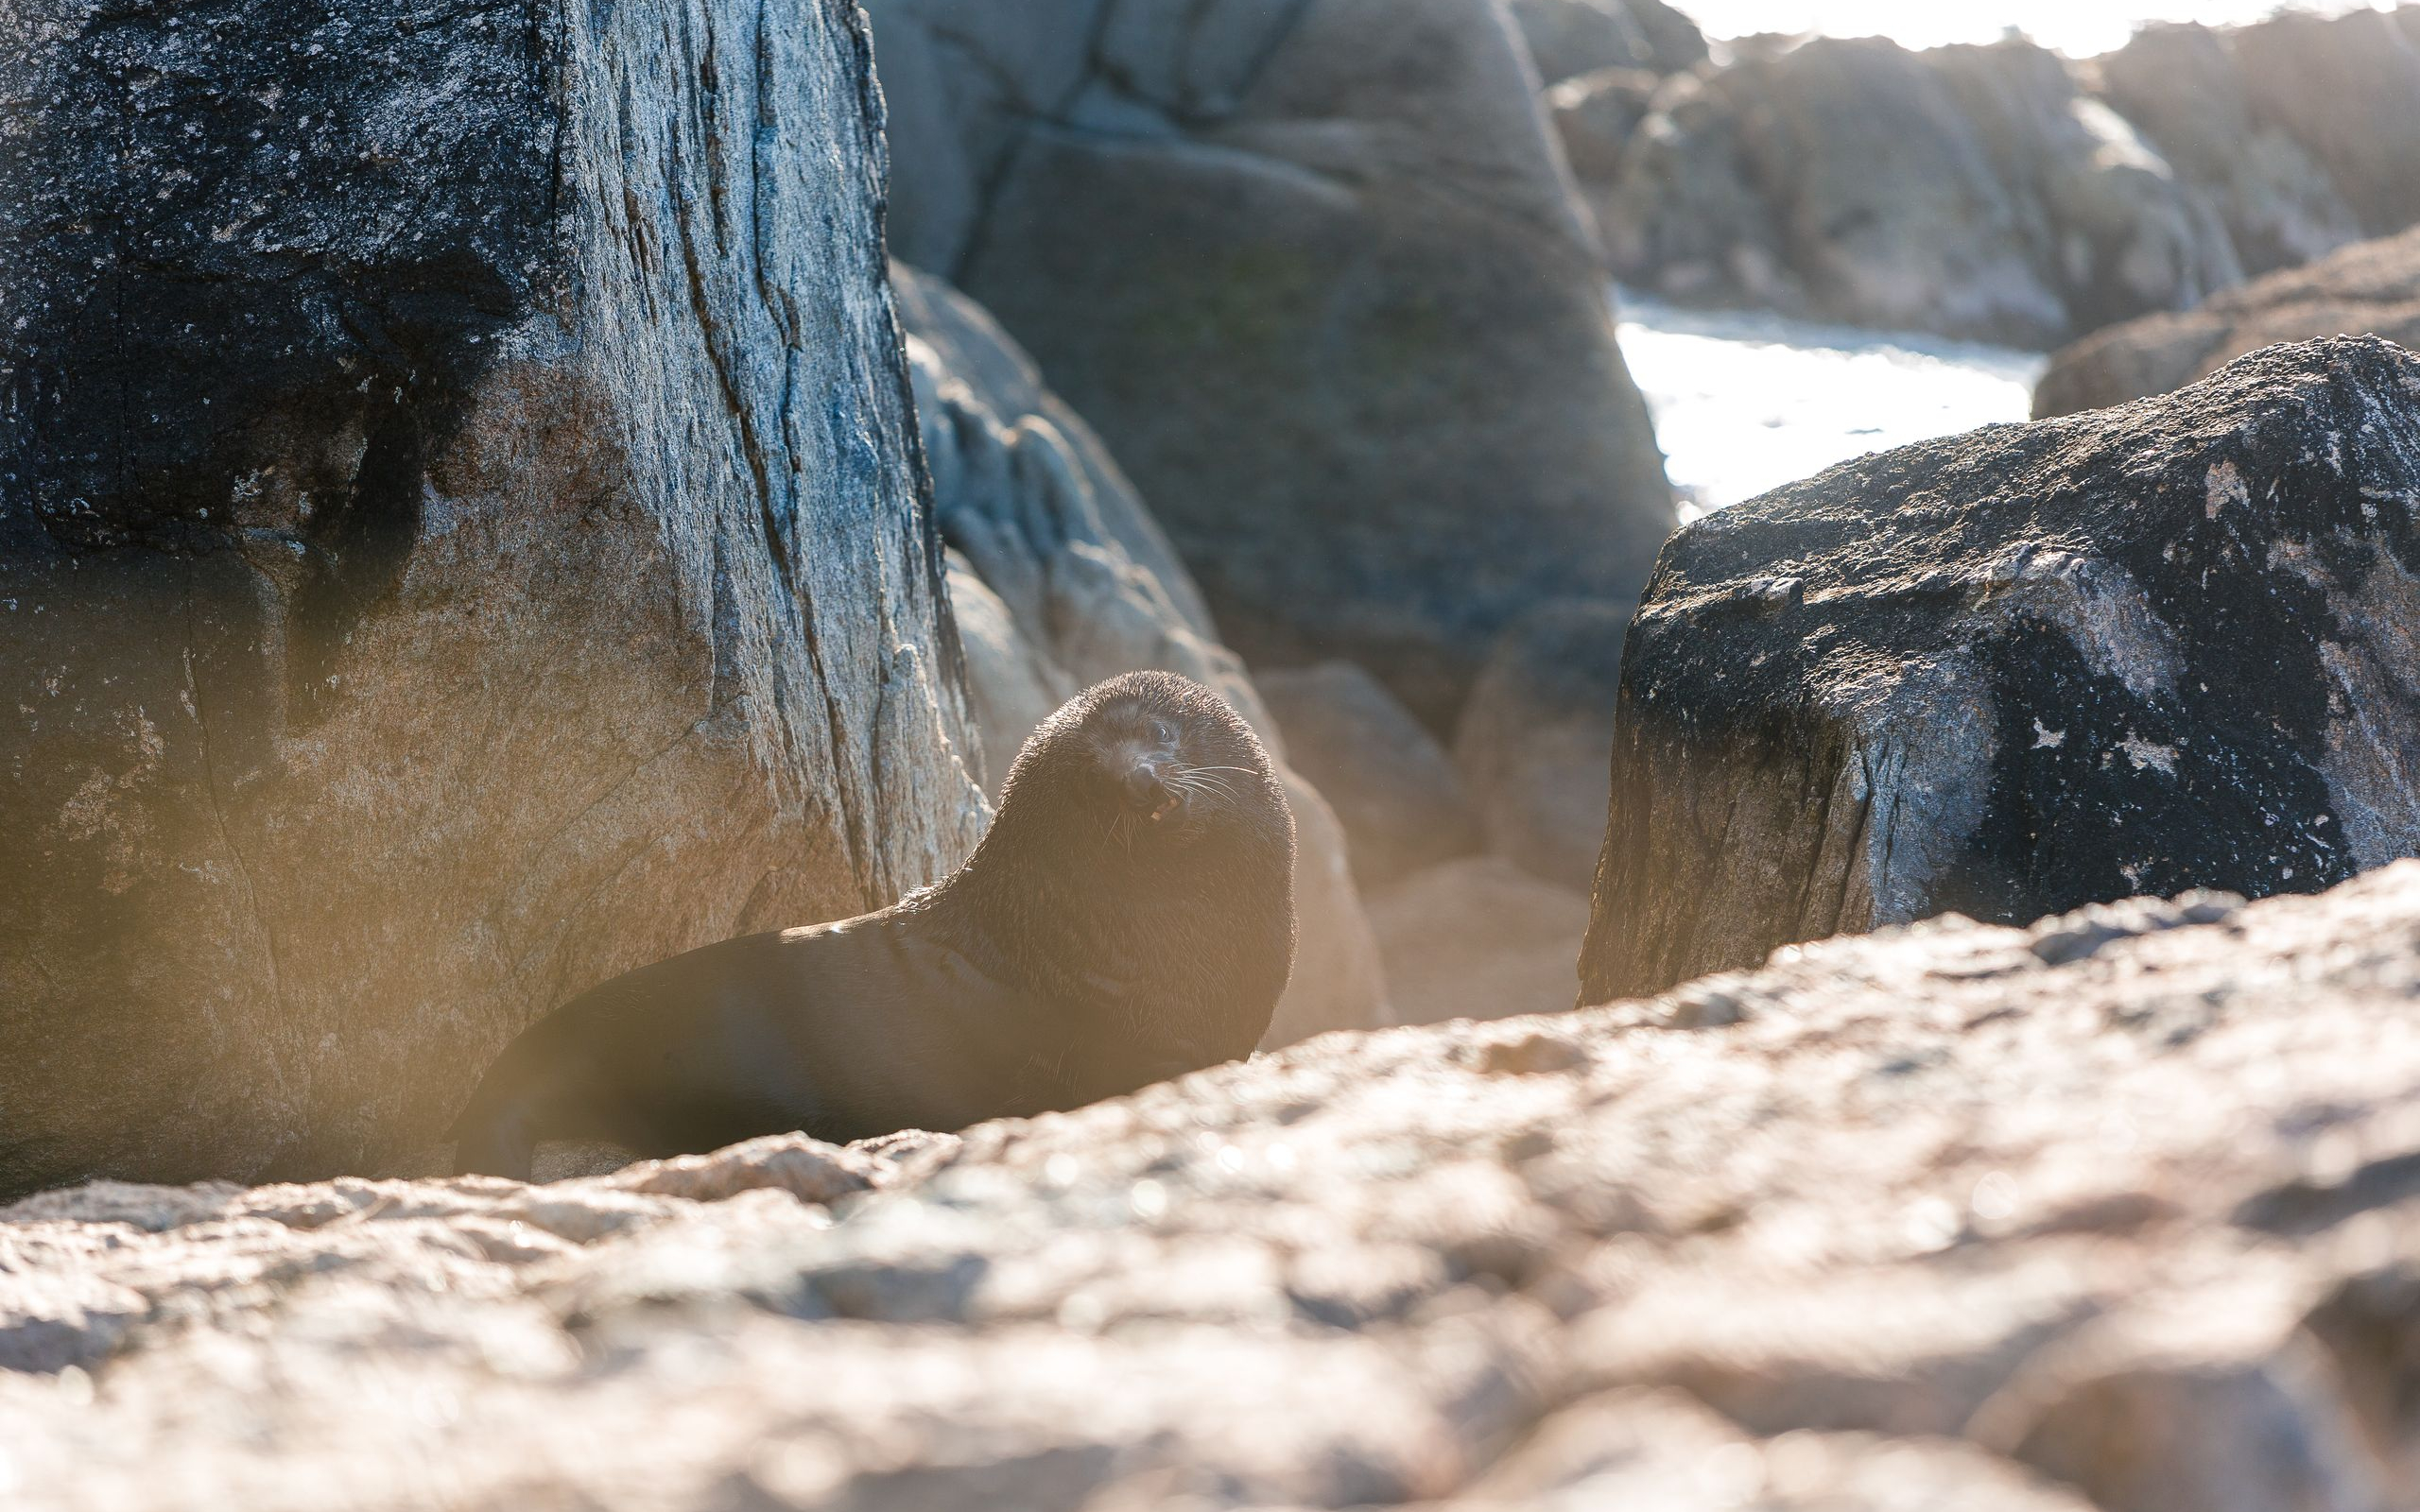 Tonga Island Marine Reserve seals Abel Tasman National Park